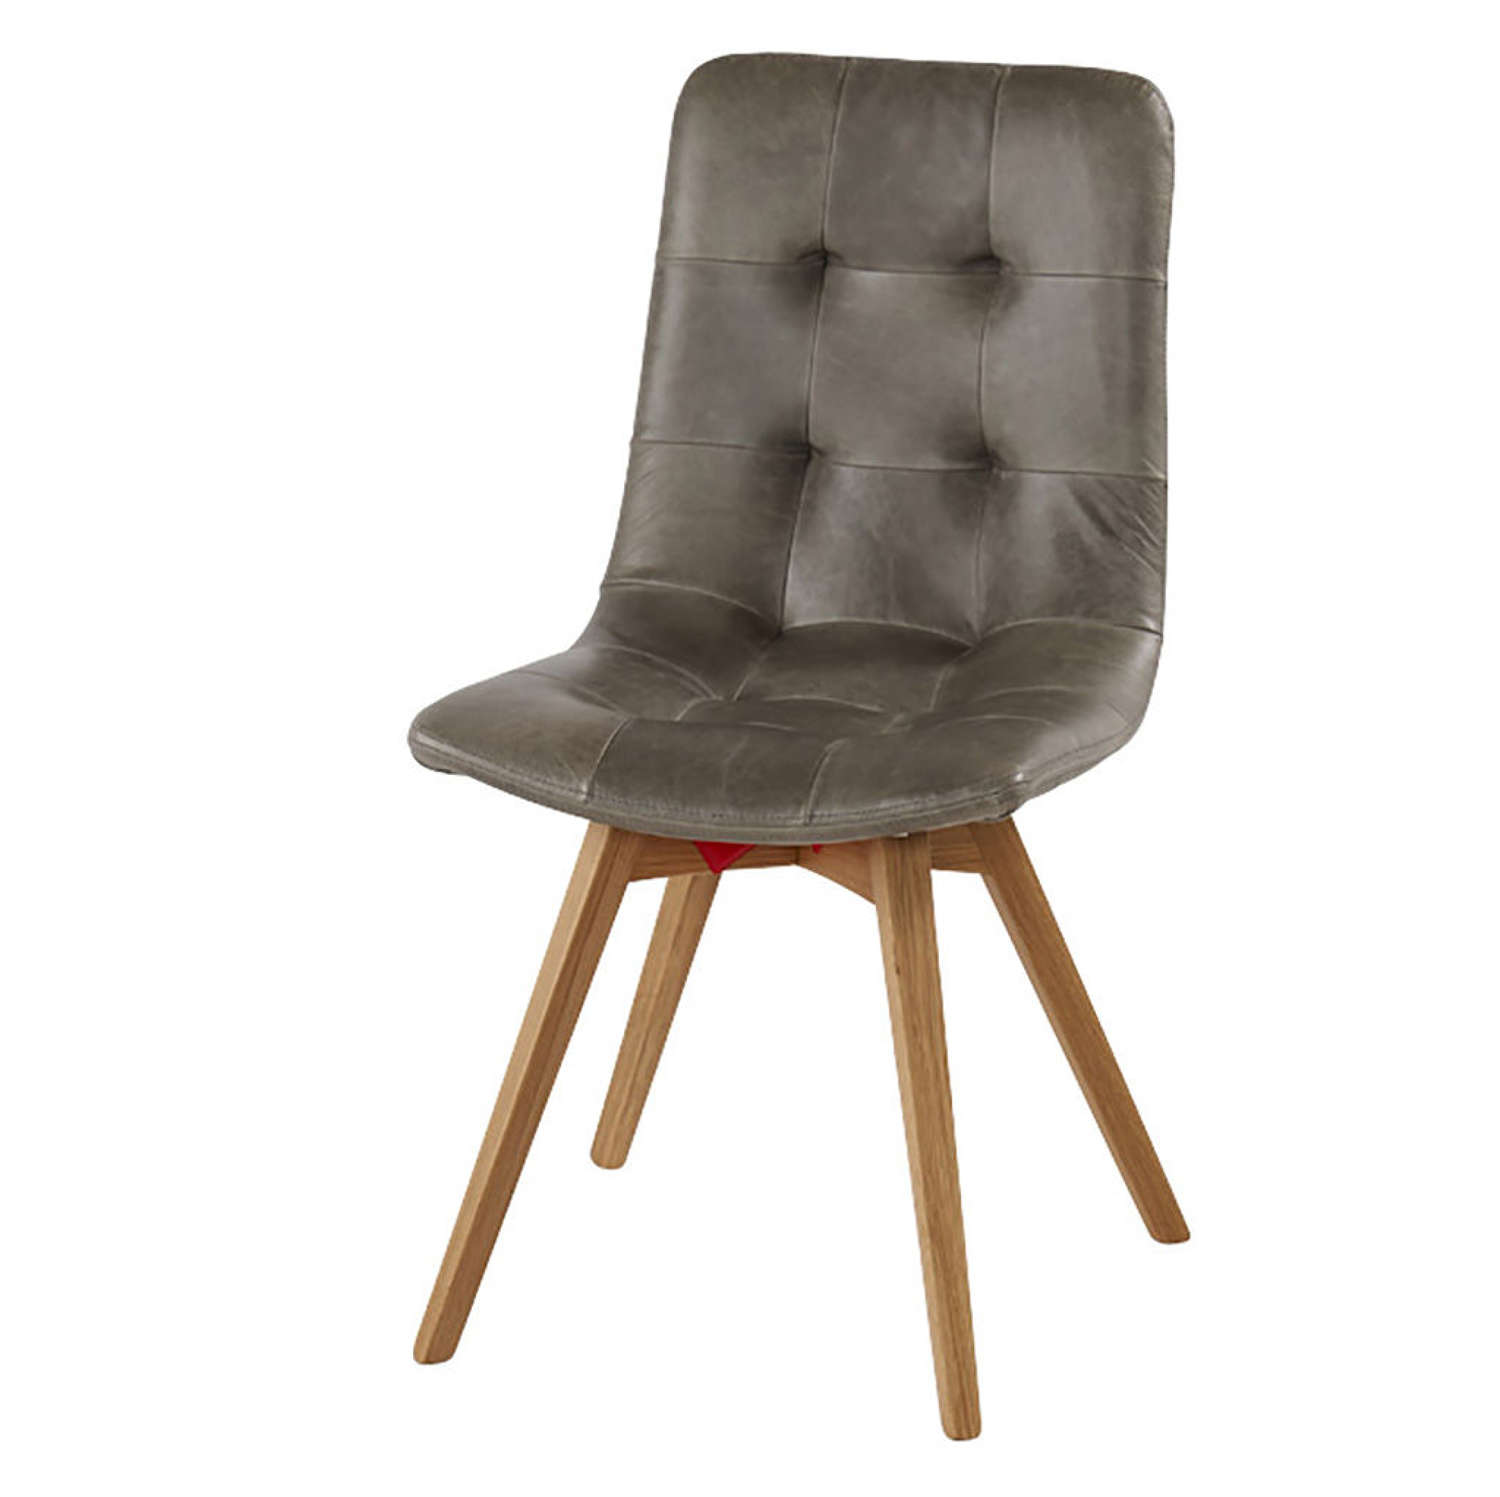 Allegro Dining chair in Cerato Grey